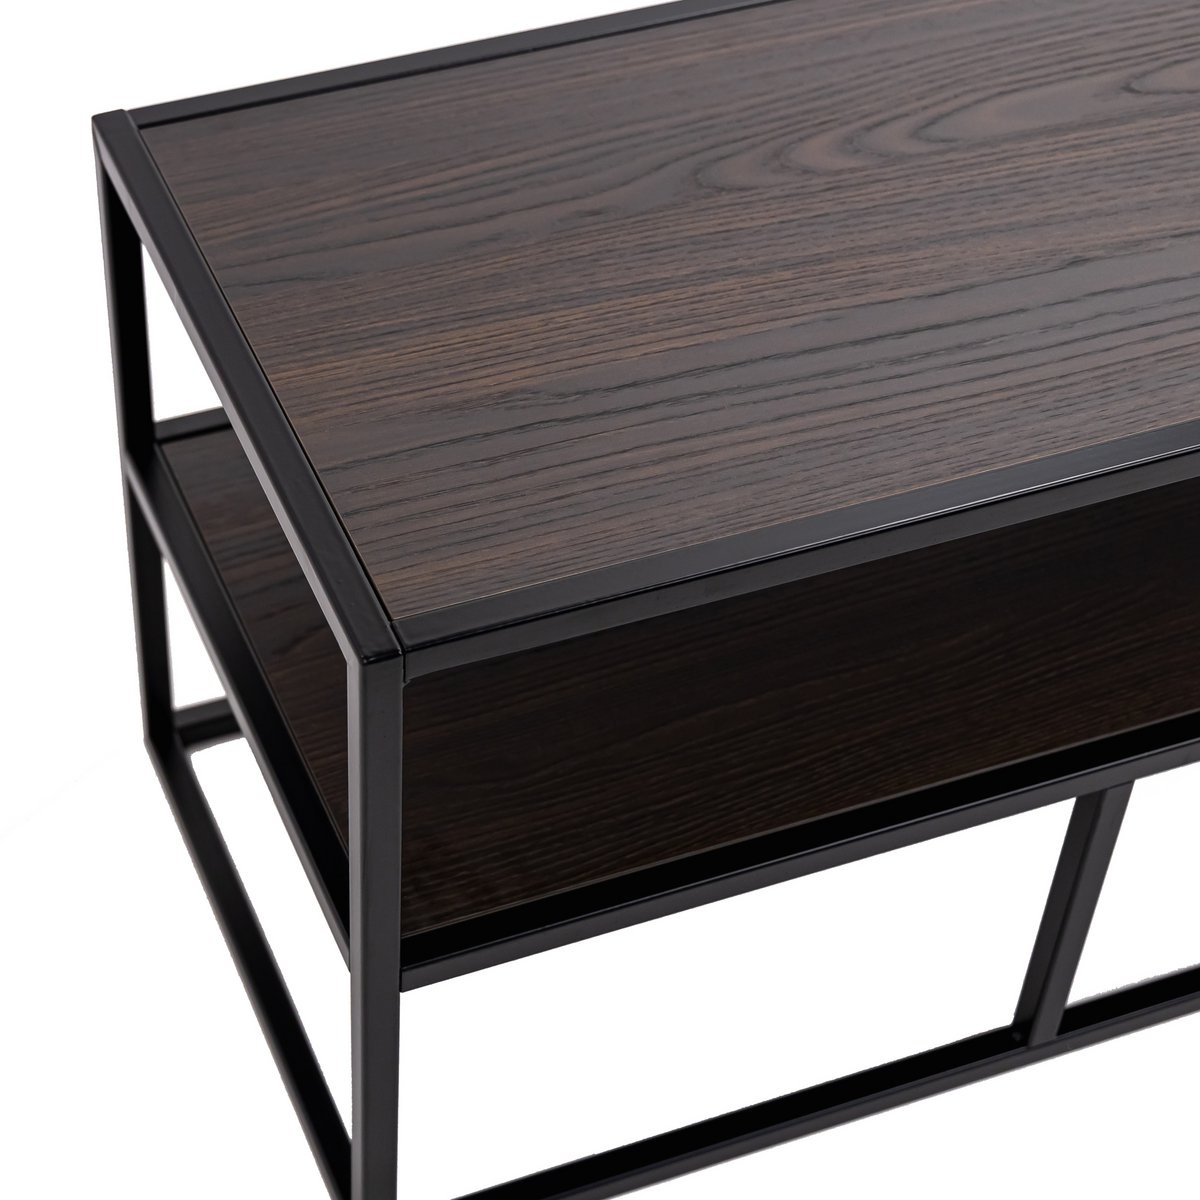 KantoormeubelenPlus Stalux Tv-meubel 'Luuk' 200cm, kleur zwart / bruin hout